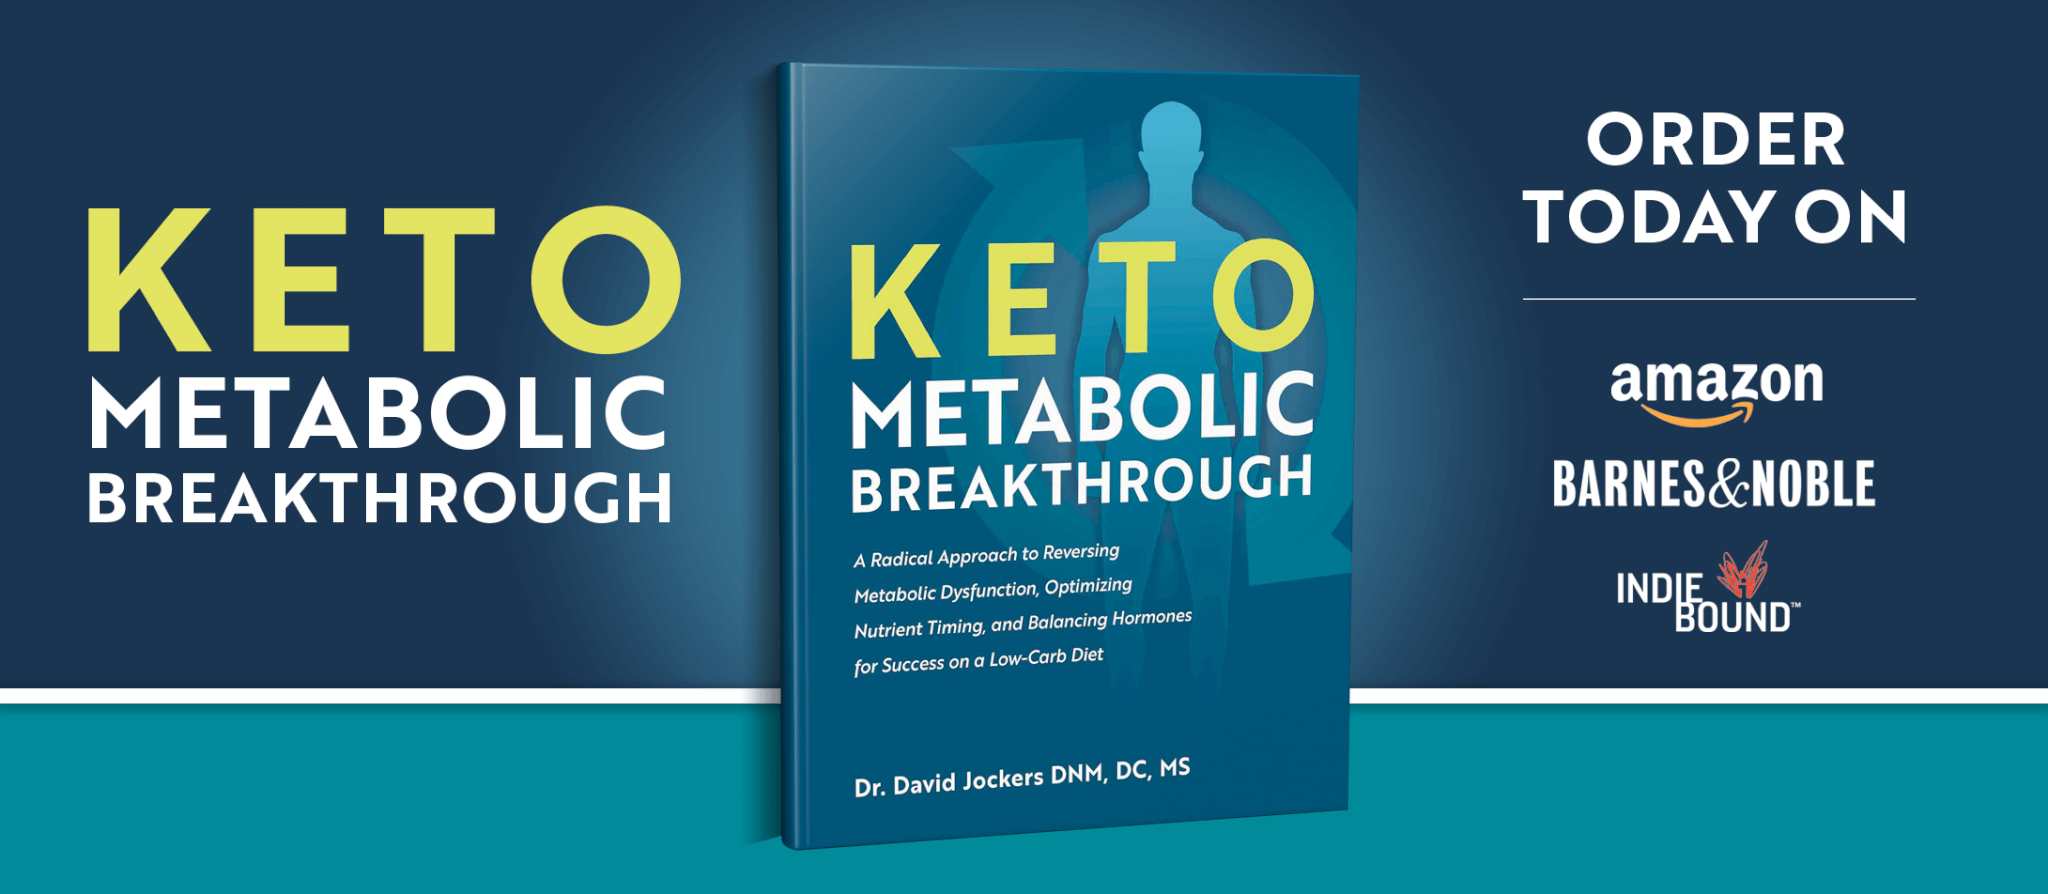 measure ketones, 5 Ways To Measure Ketones In Your Body